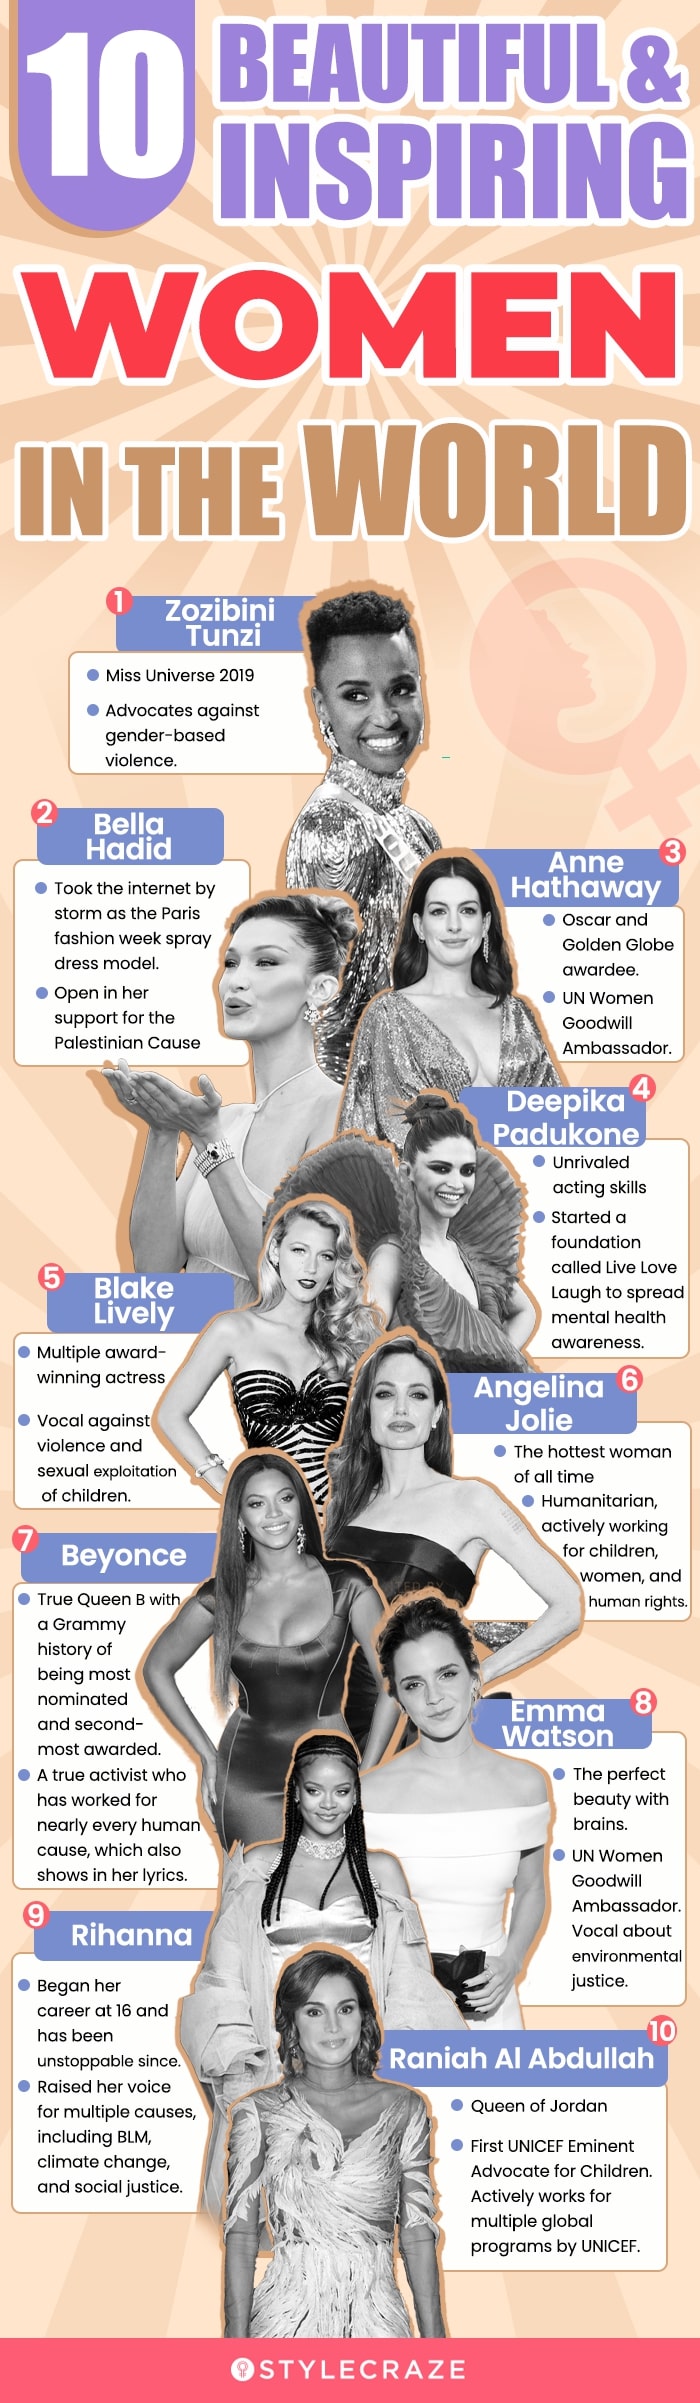 10 beautiful & inspiring women in the world (infographic)